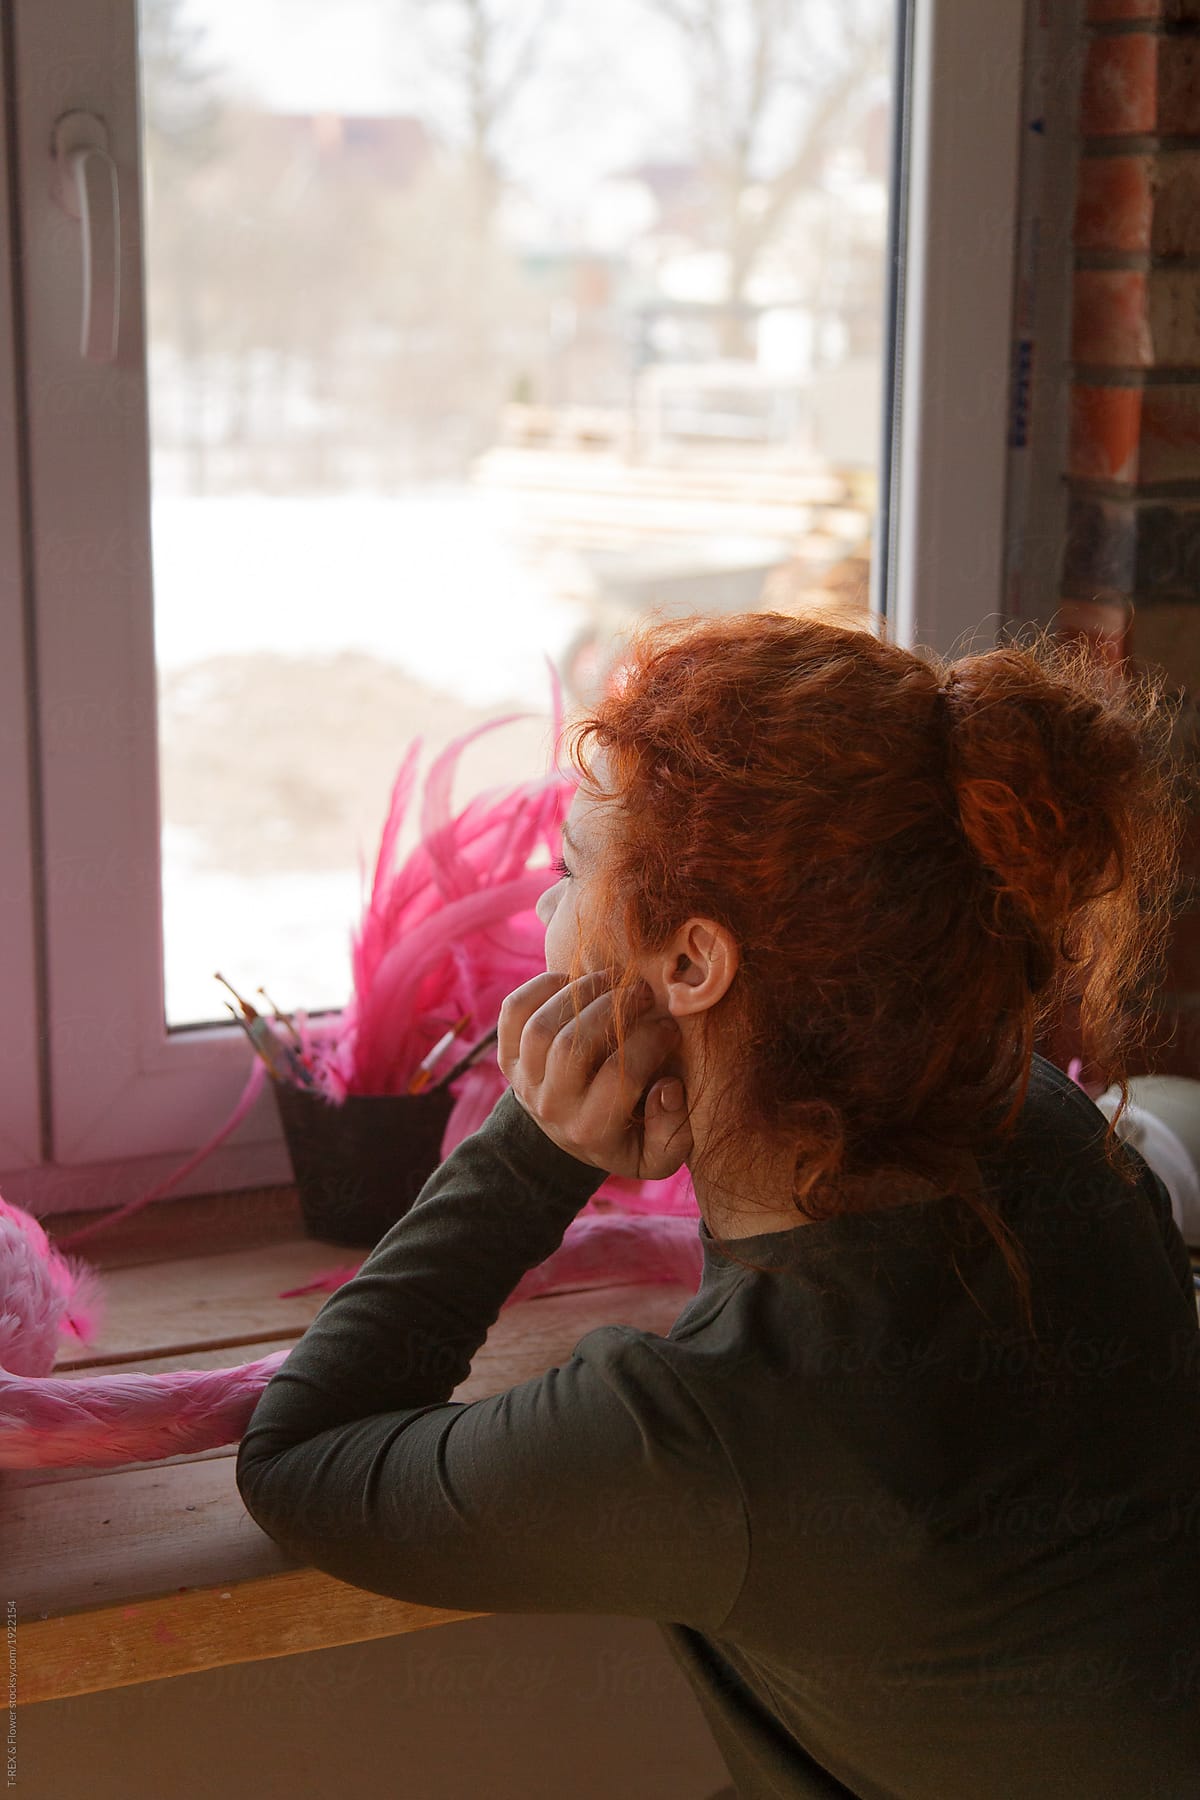 Pensive redhead woman looking at window